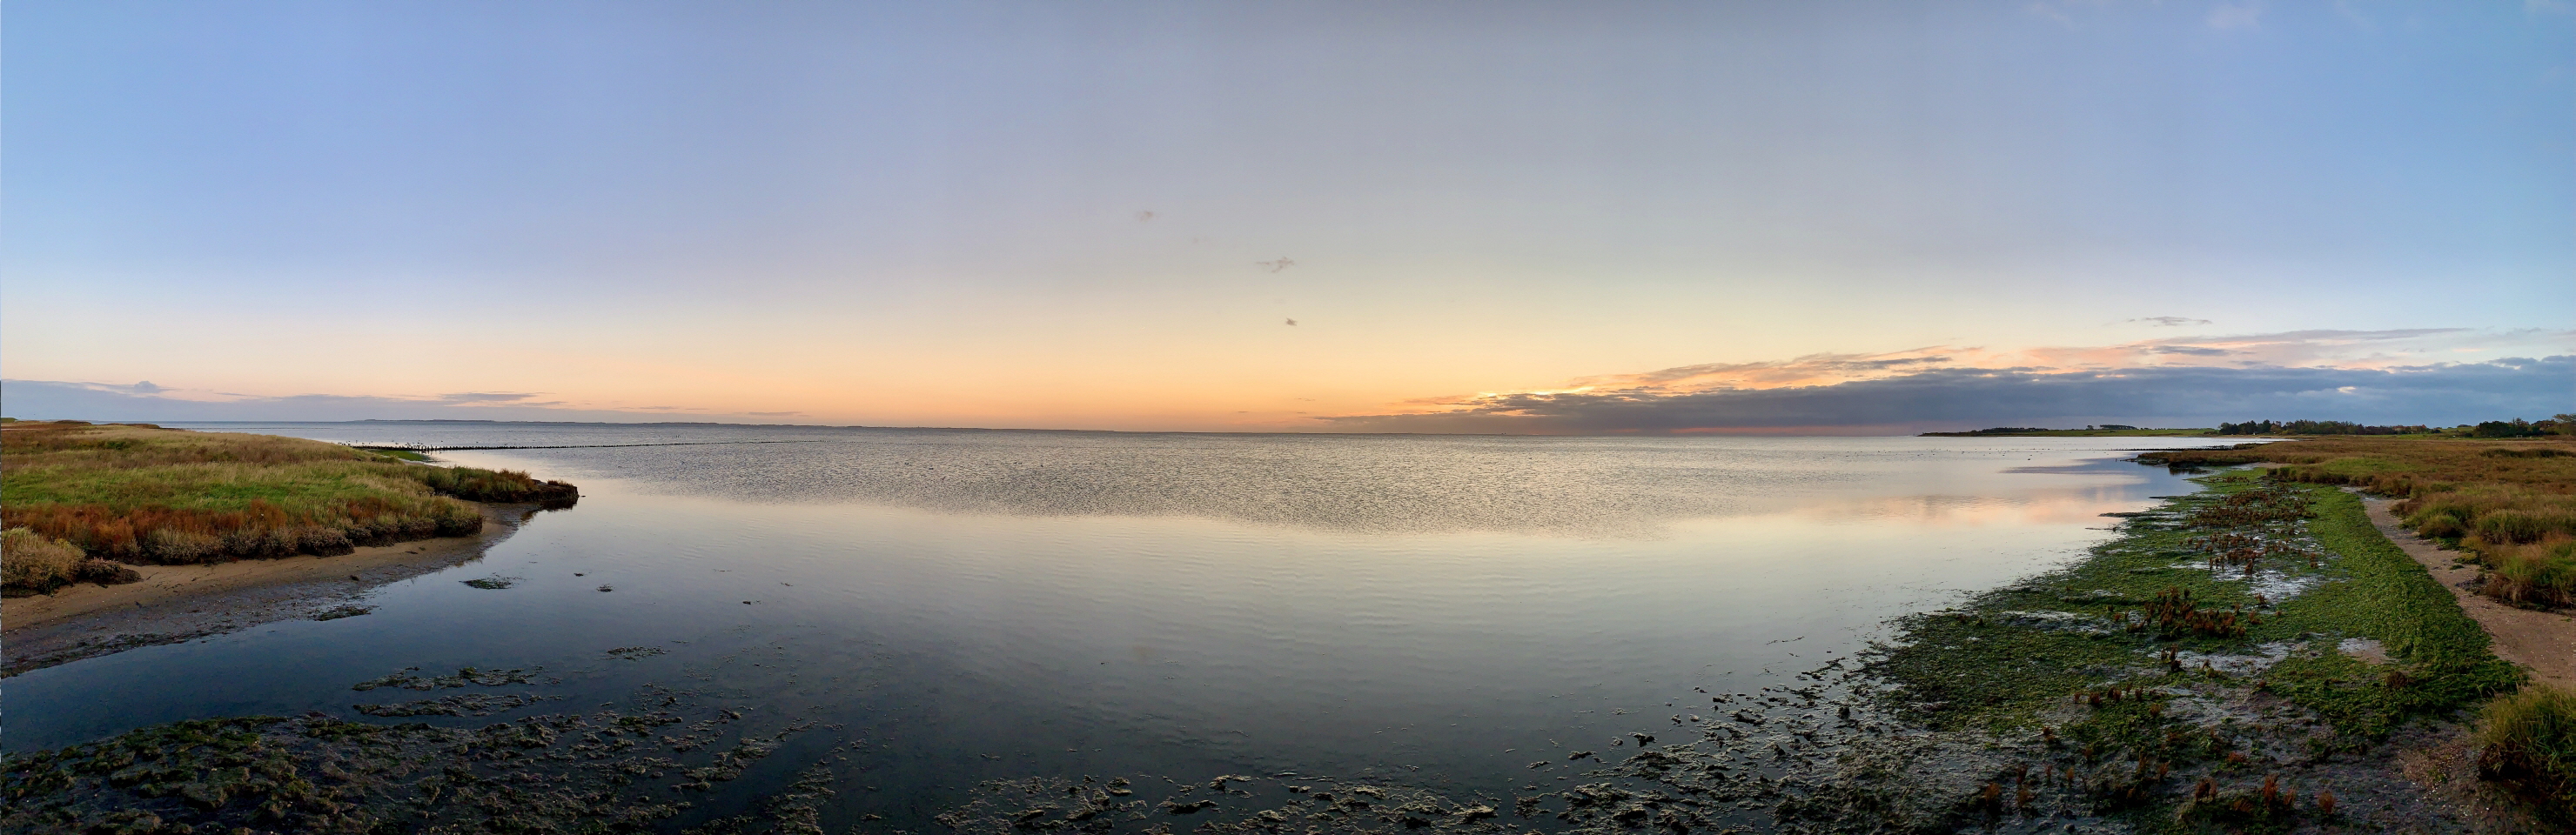 Panorama-2960x960_Amrum Wadden Sea Morning (5618)